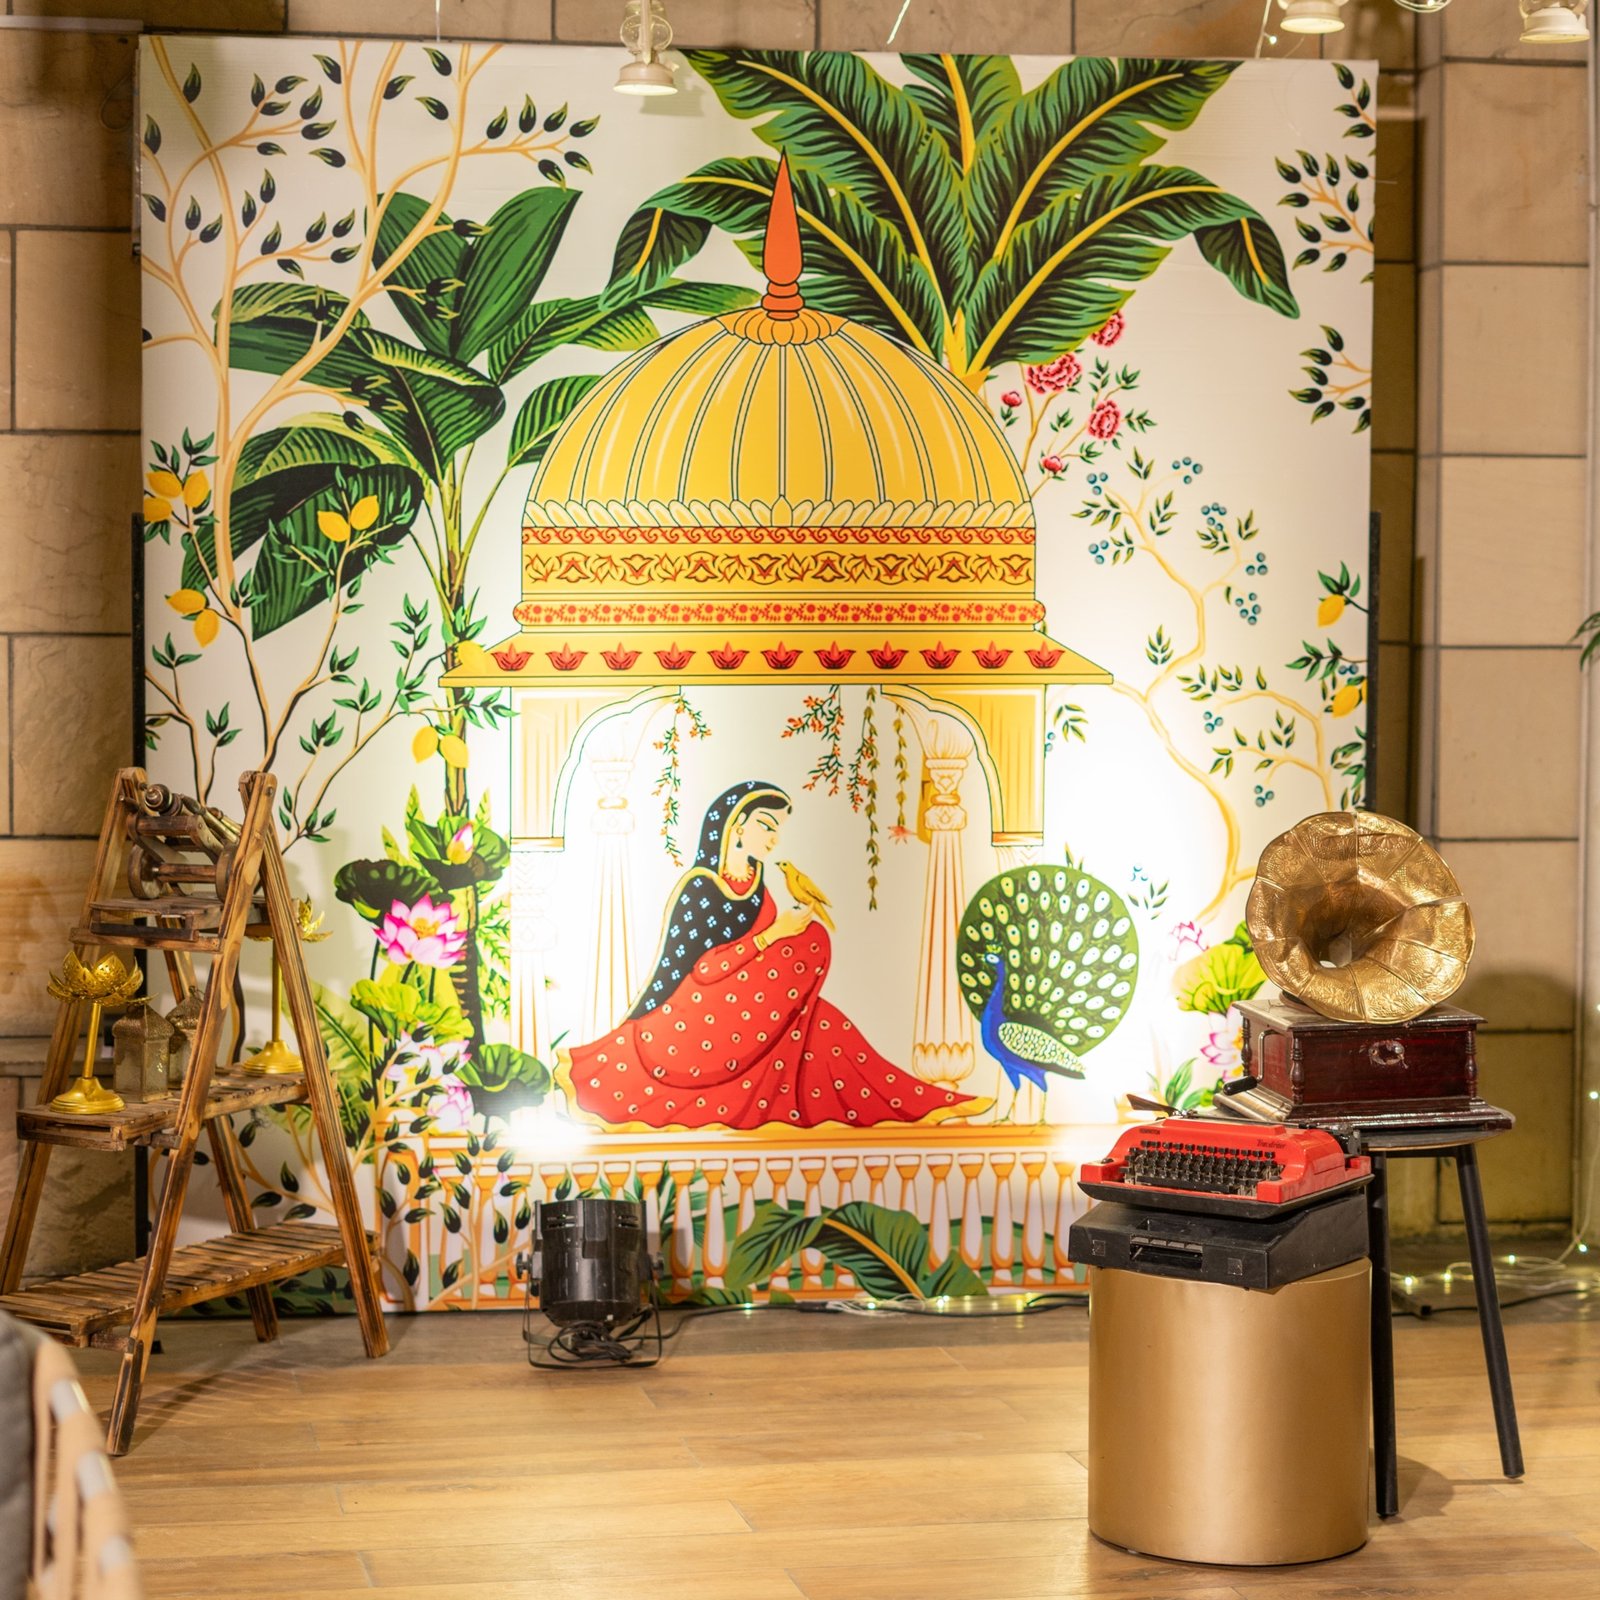 Zaiqa-E-Dilli: A Culinary Journey into Old Delhi’s Rich Gastronomic Tapestry at Infinity, Crowne Plaza Mayur Vihar Noida